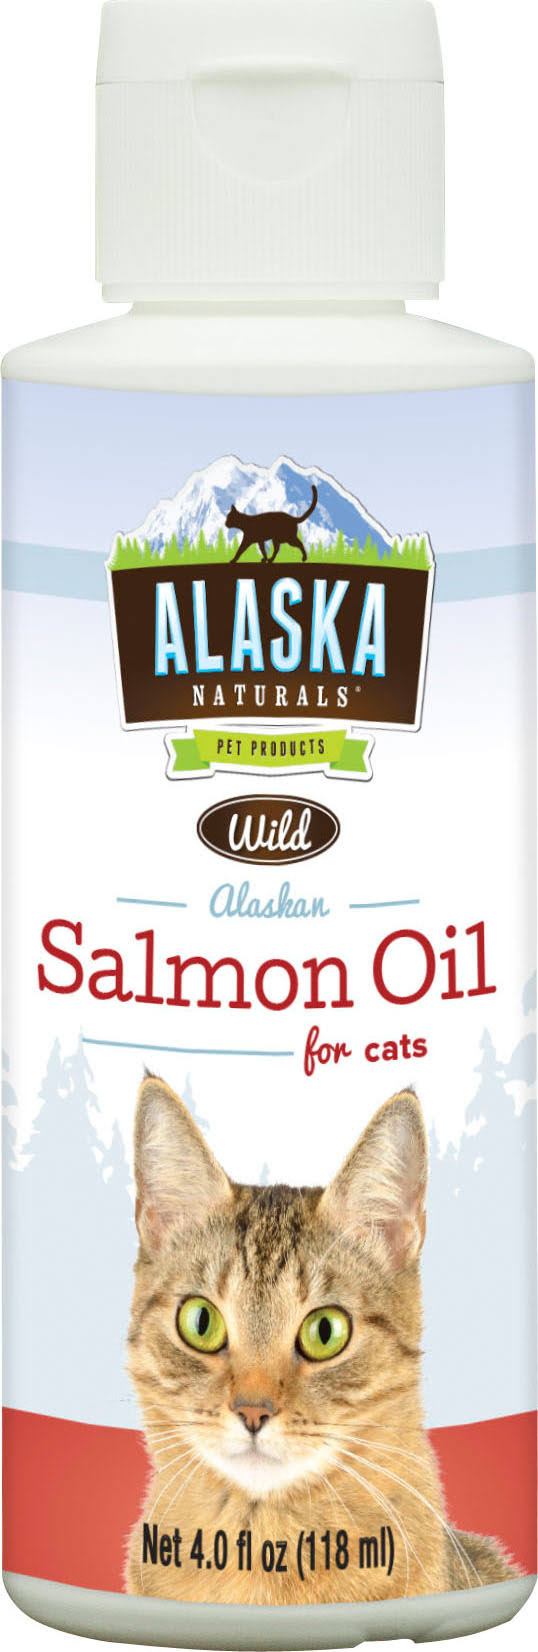 Alaska Naturals Alaskan Wild Salmon Oil for Cats - 4oz